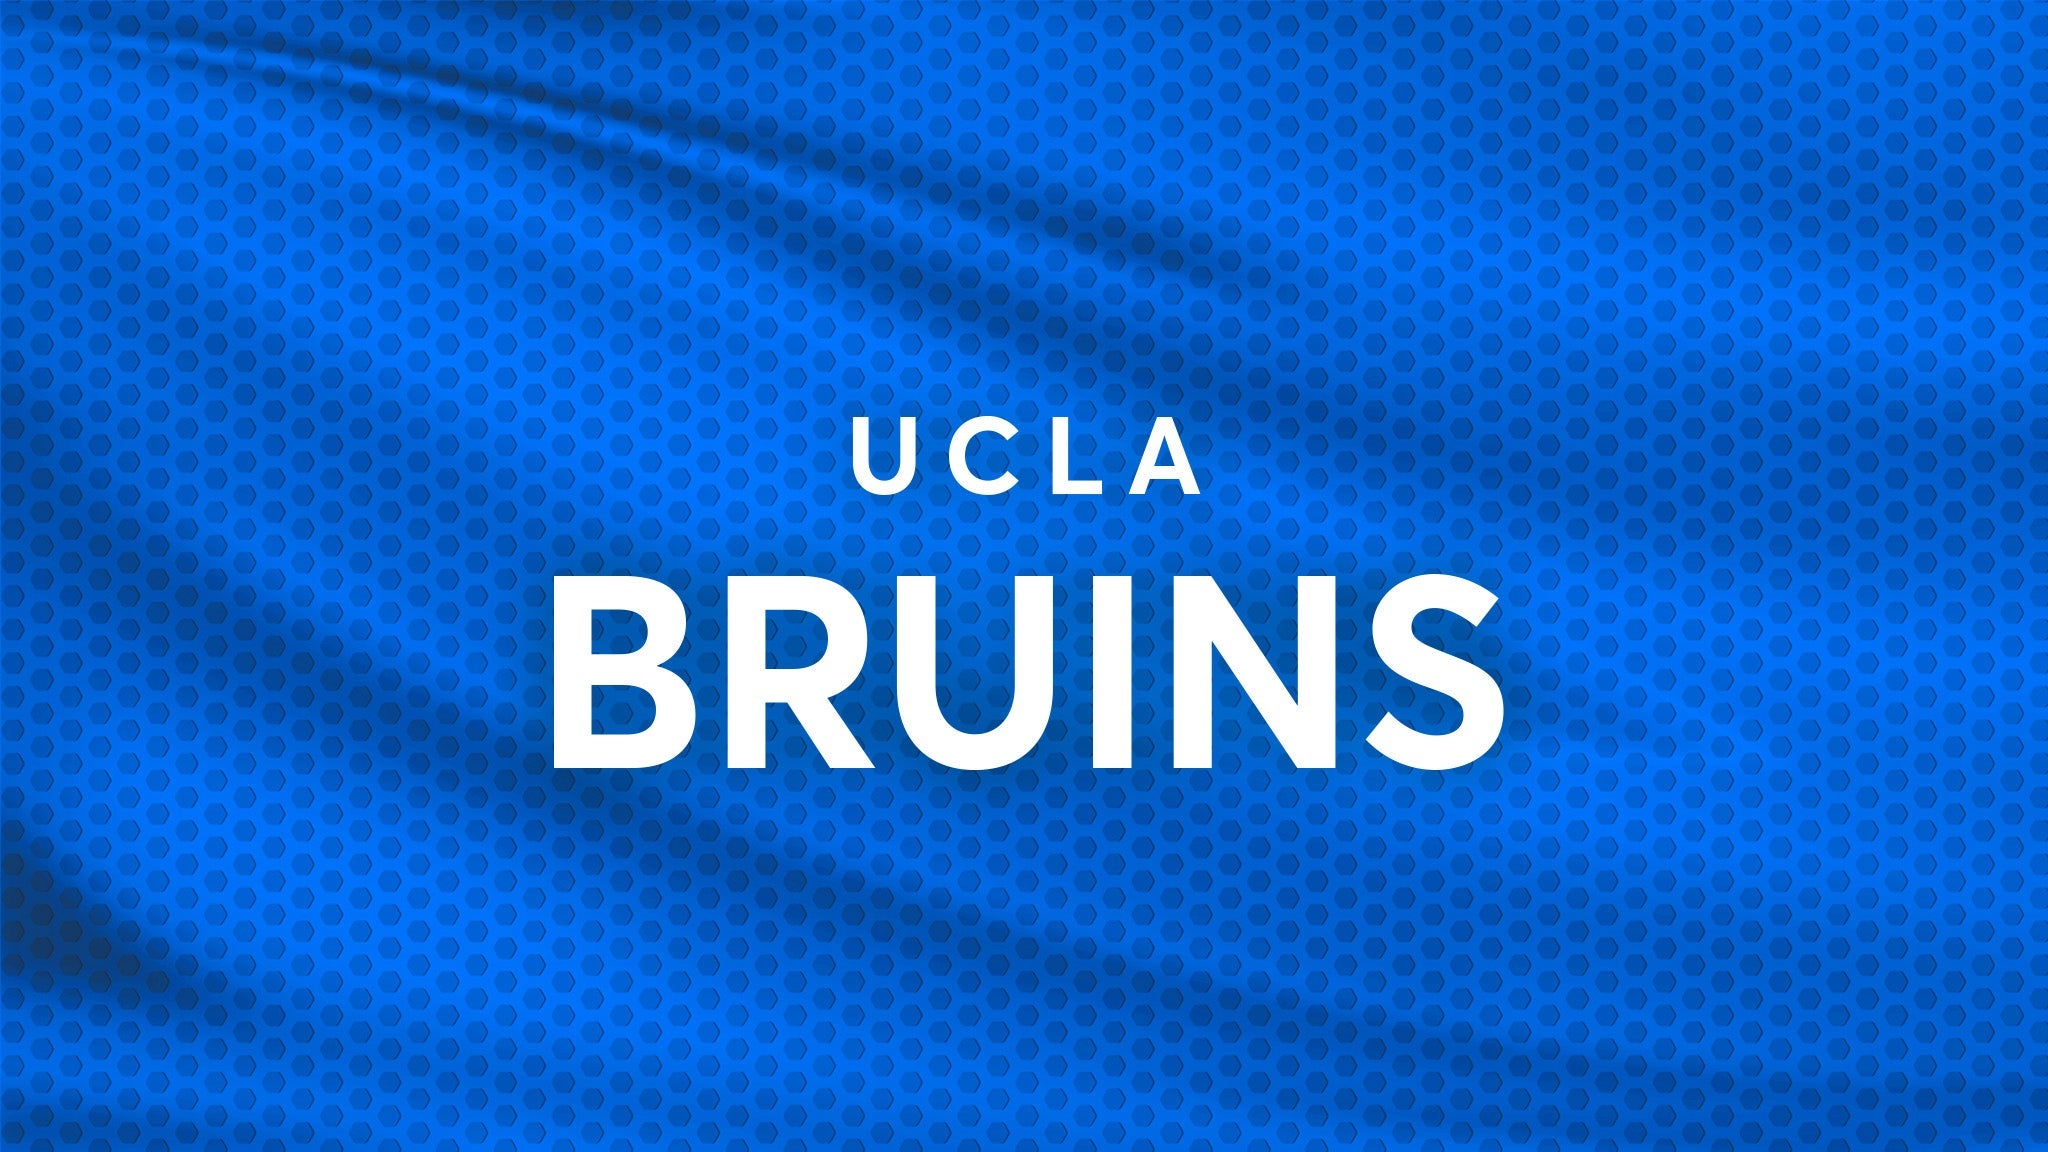 UCLA Bruins Football vs. California Golden Bears Football